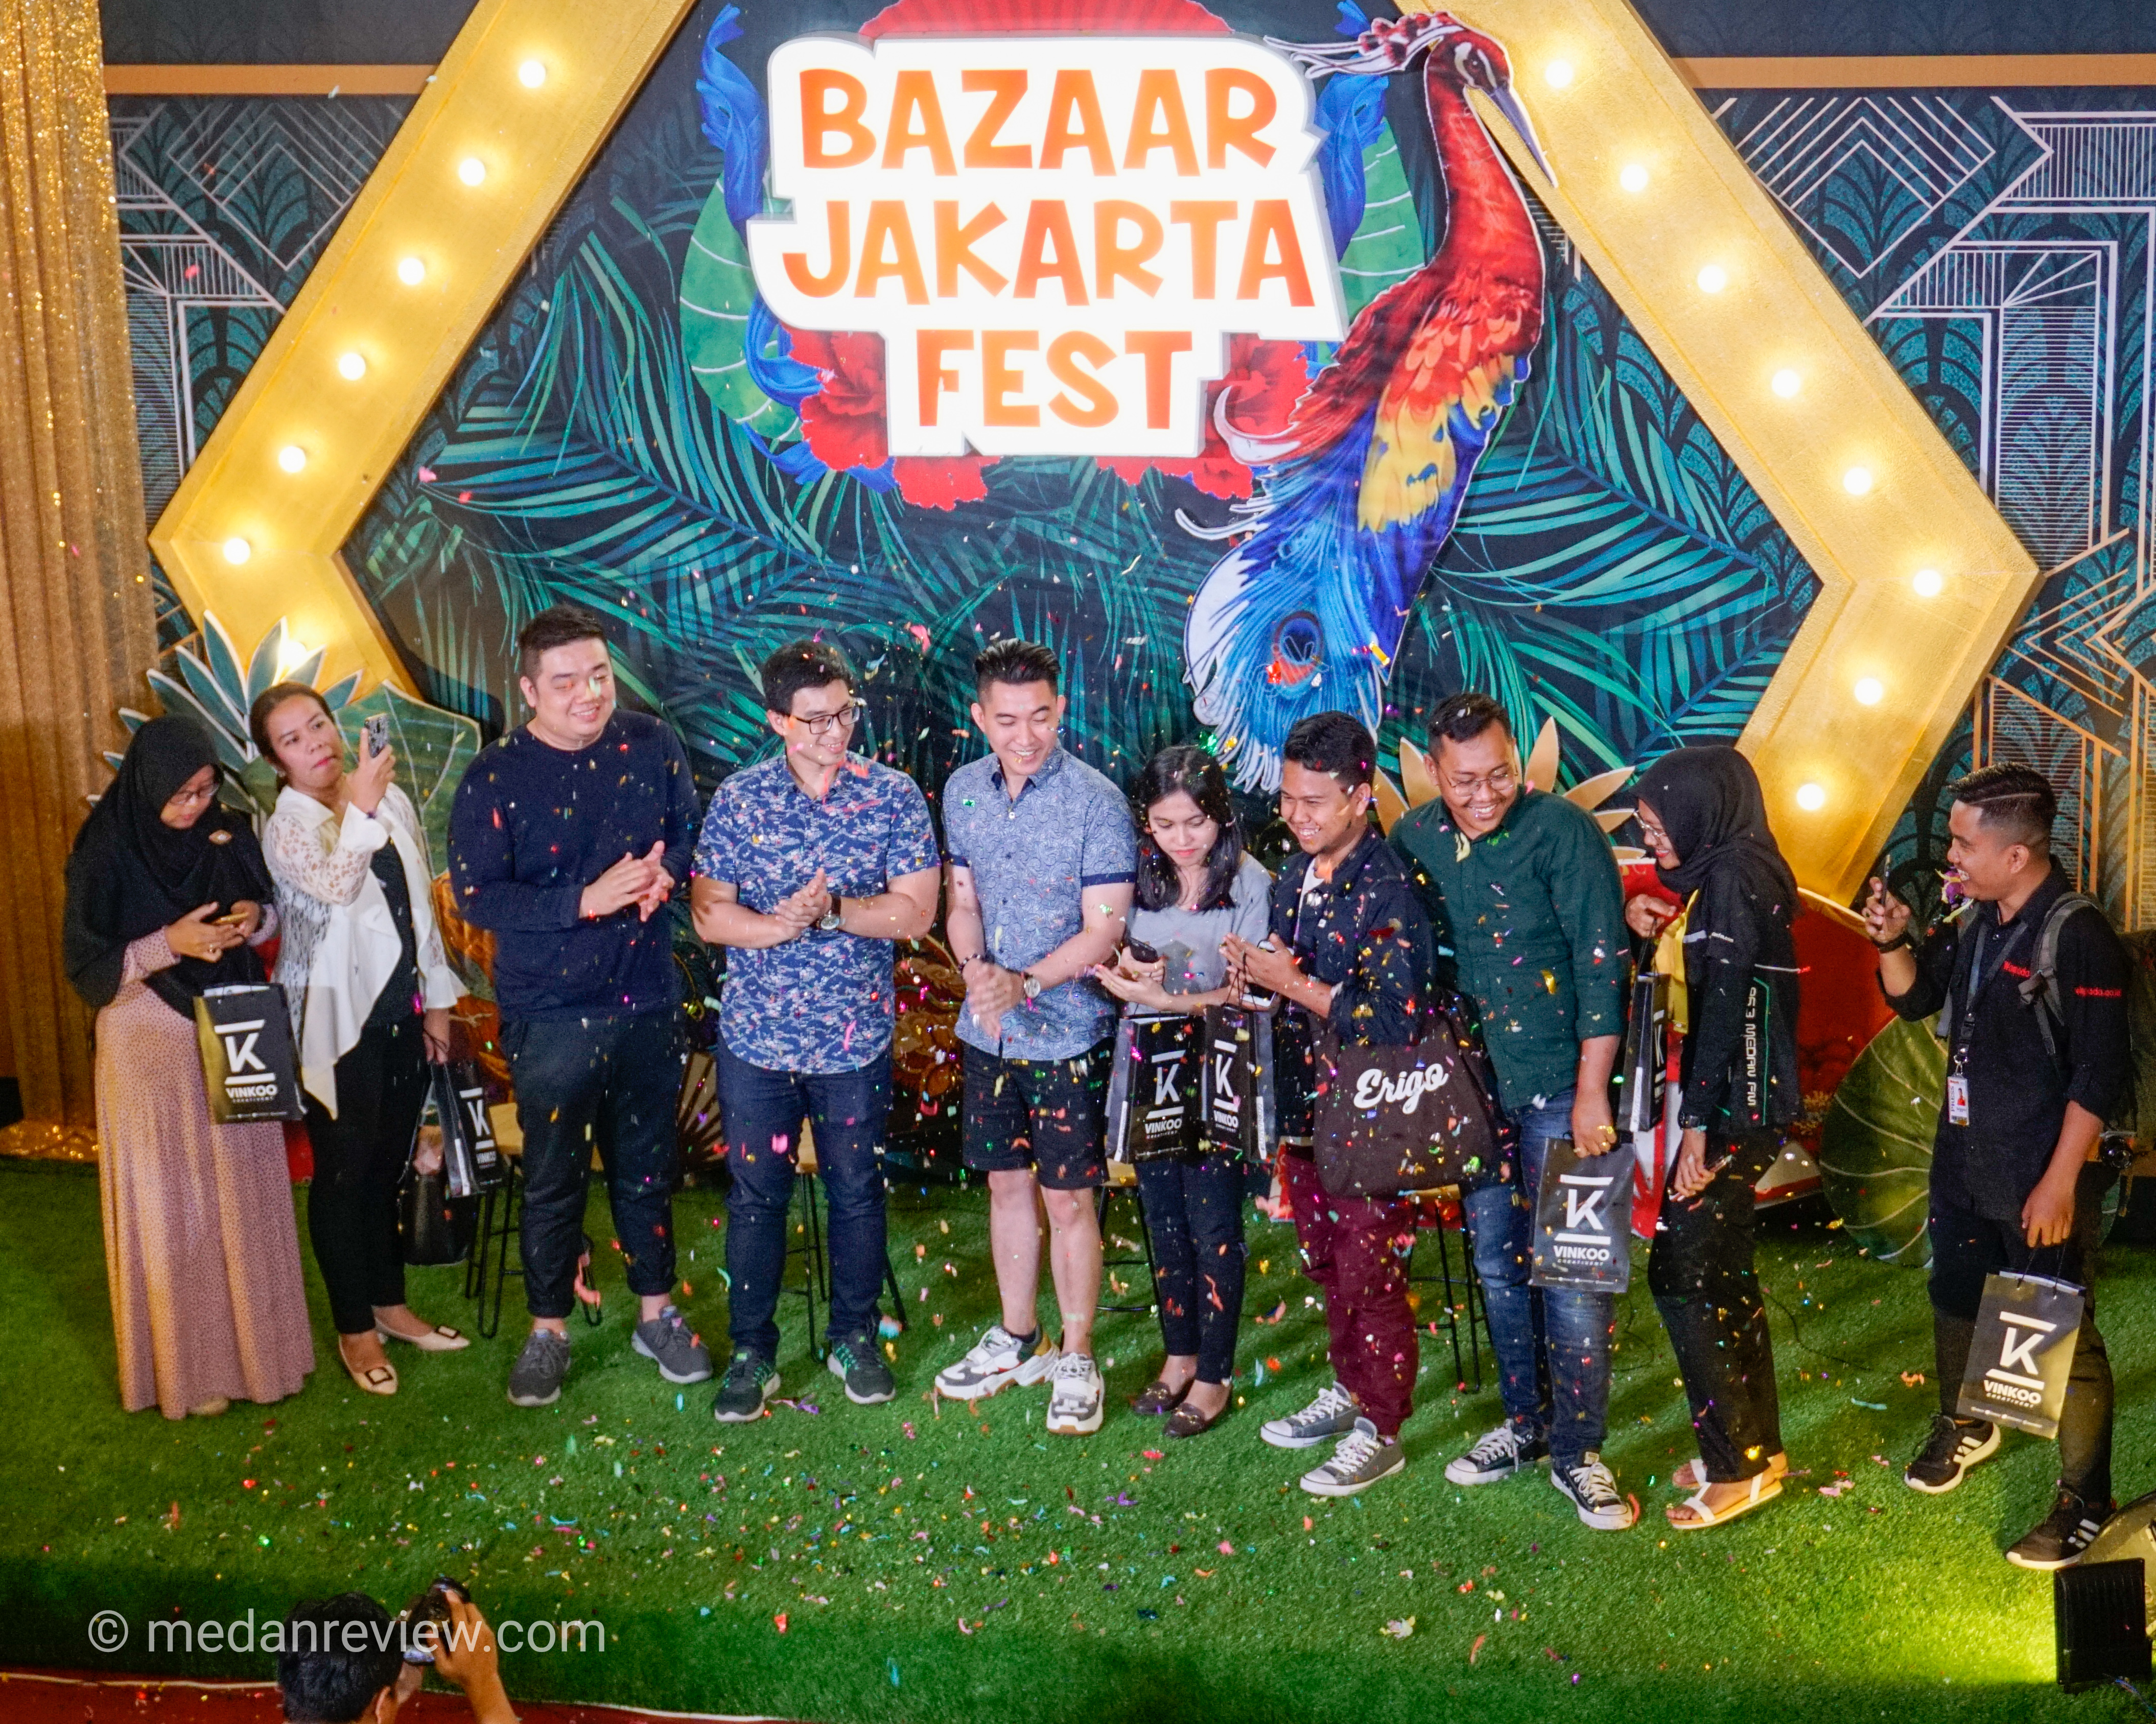 Vinkoo : Bazaar Jakarta Fest 2019 Kembali Digelar di Sun Plaza Medan